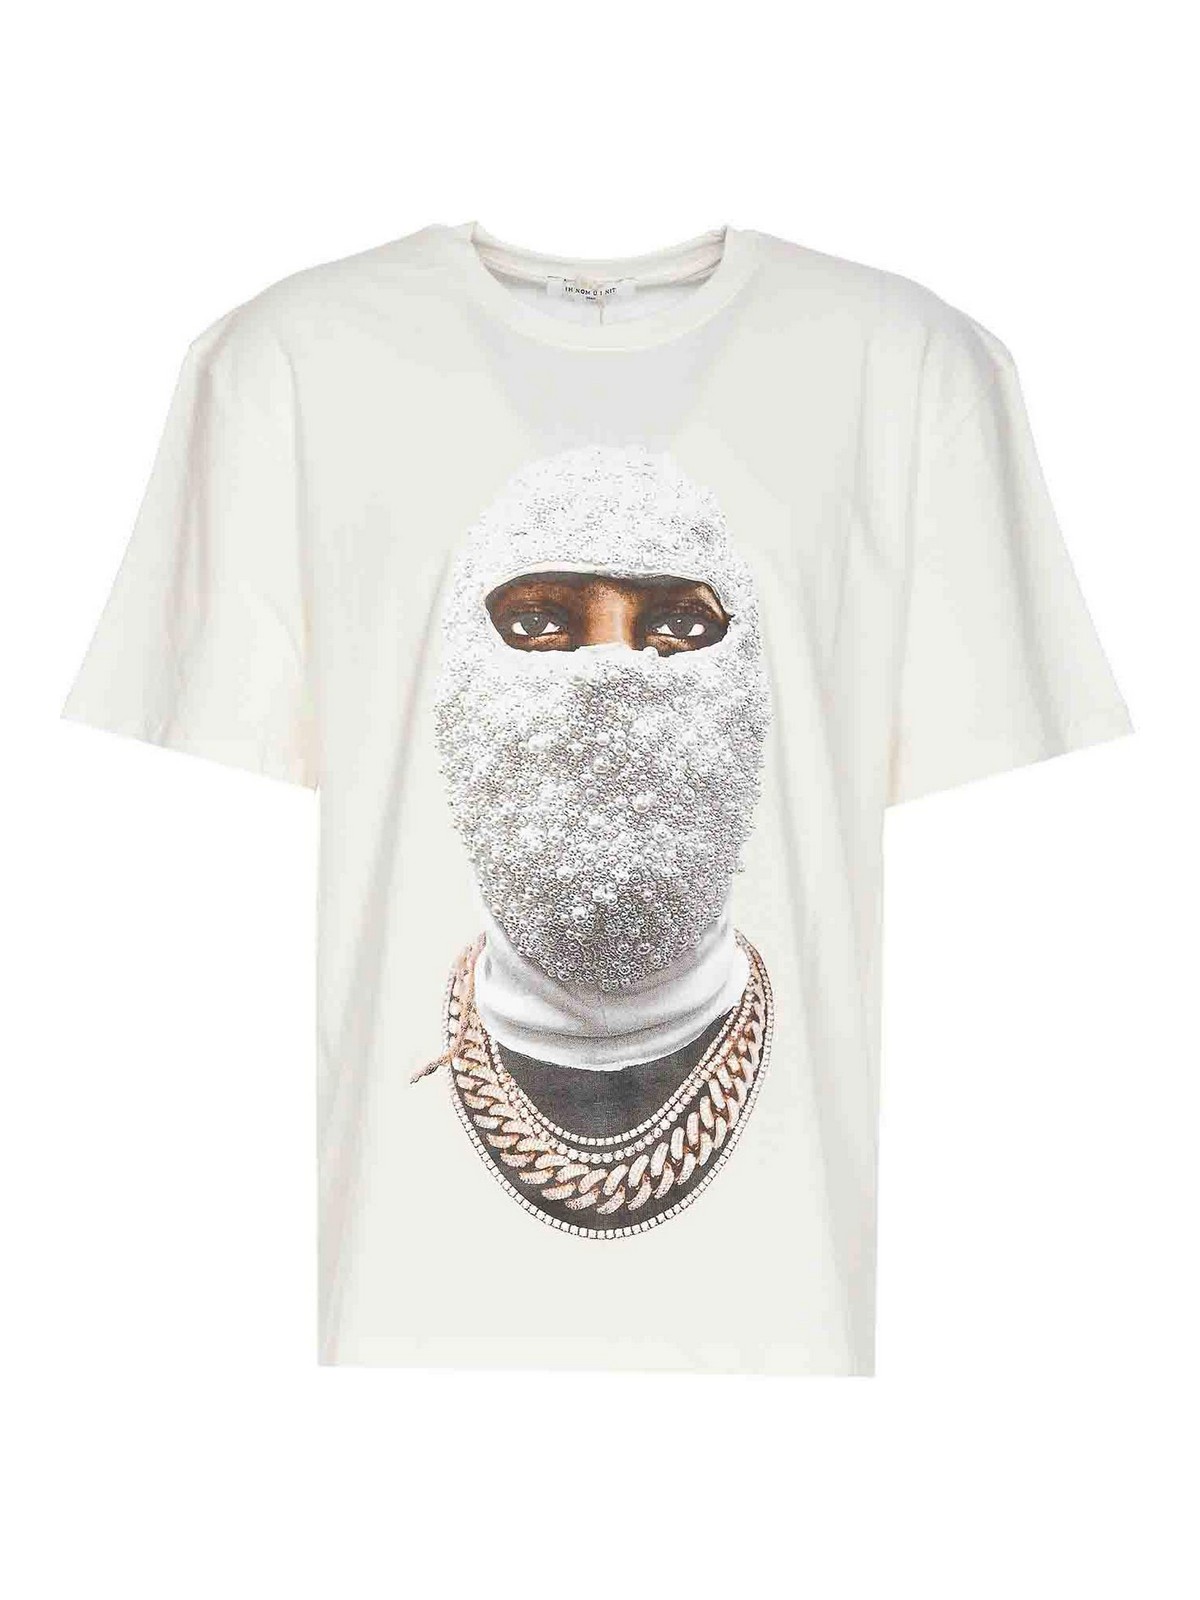 Shop Ih Nom Uh Nit Camiseta - Blanco In White